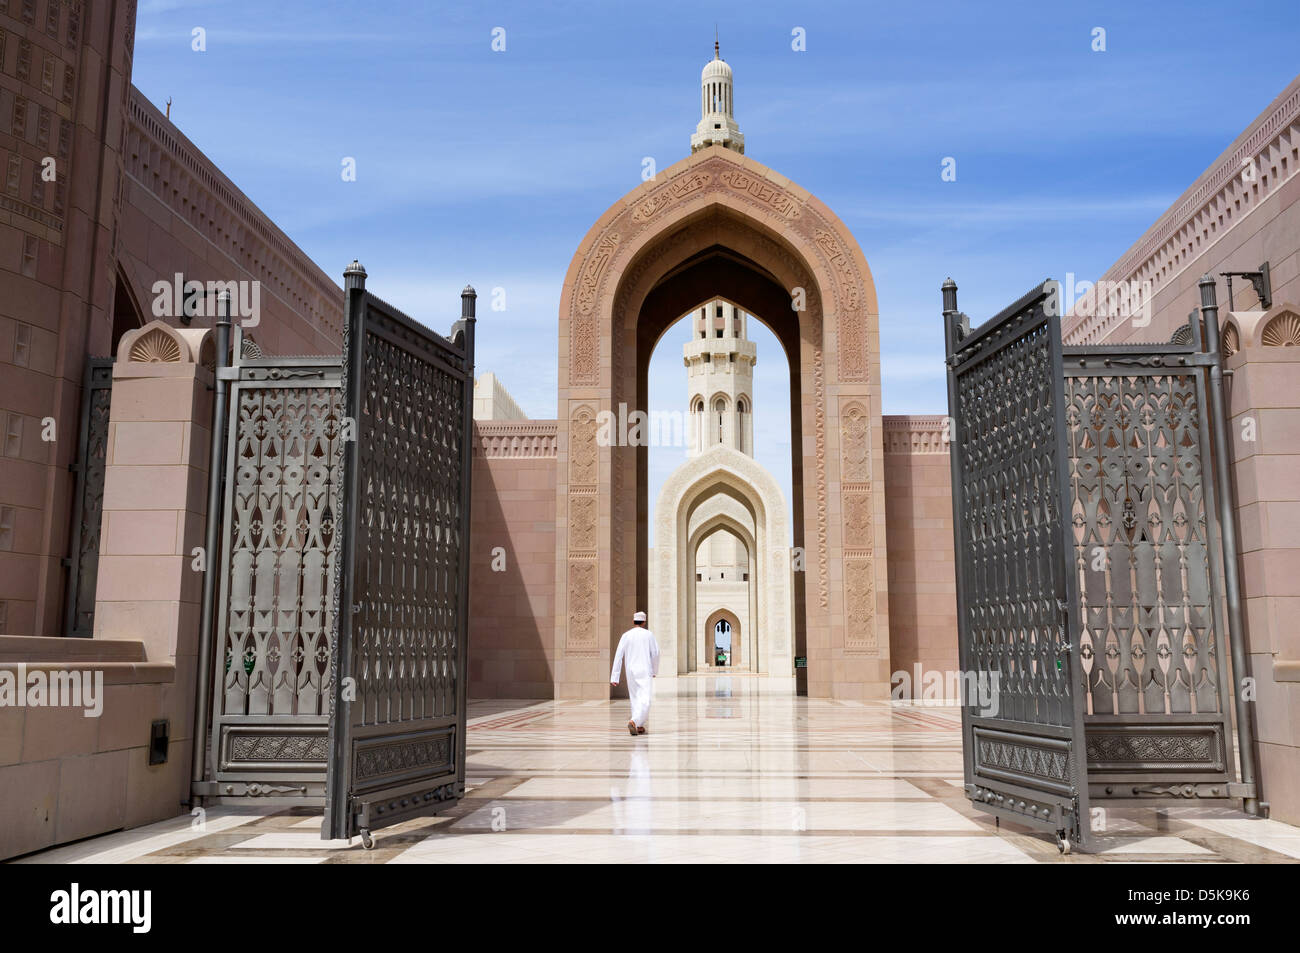 Le Sultan Qaboos Grand Mosque in Muscat Oman Moyen-orient Banque D'Images